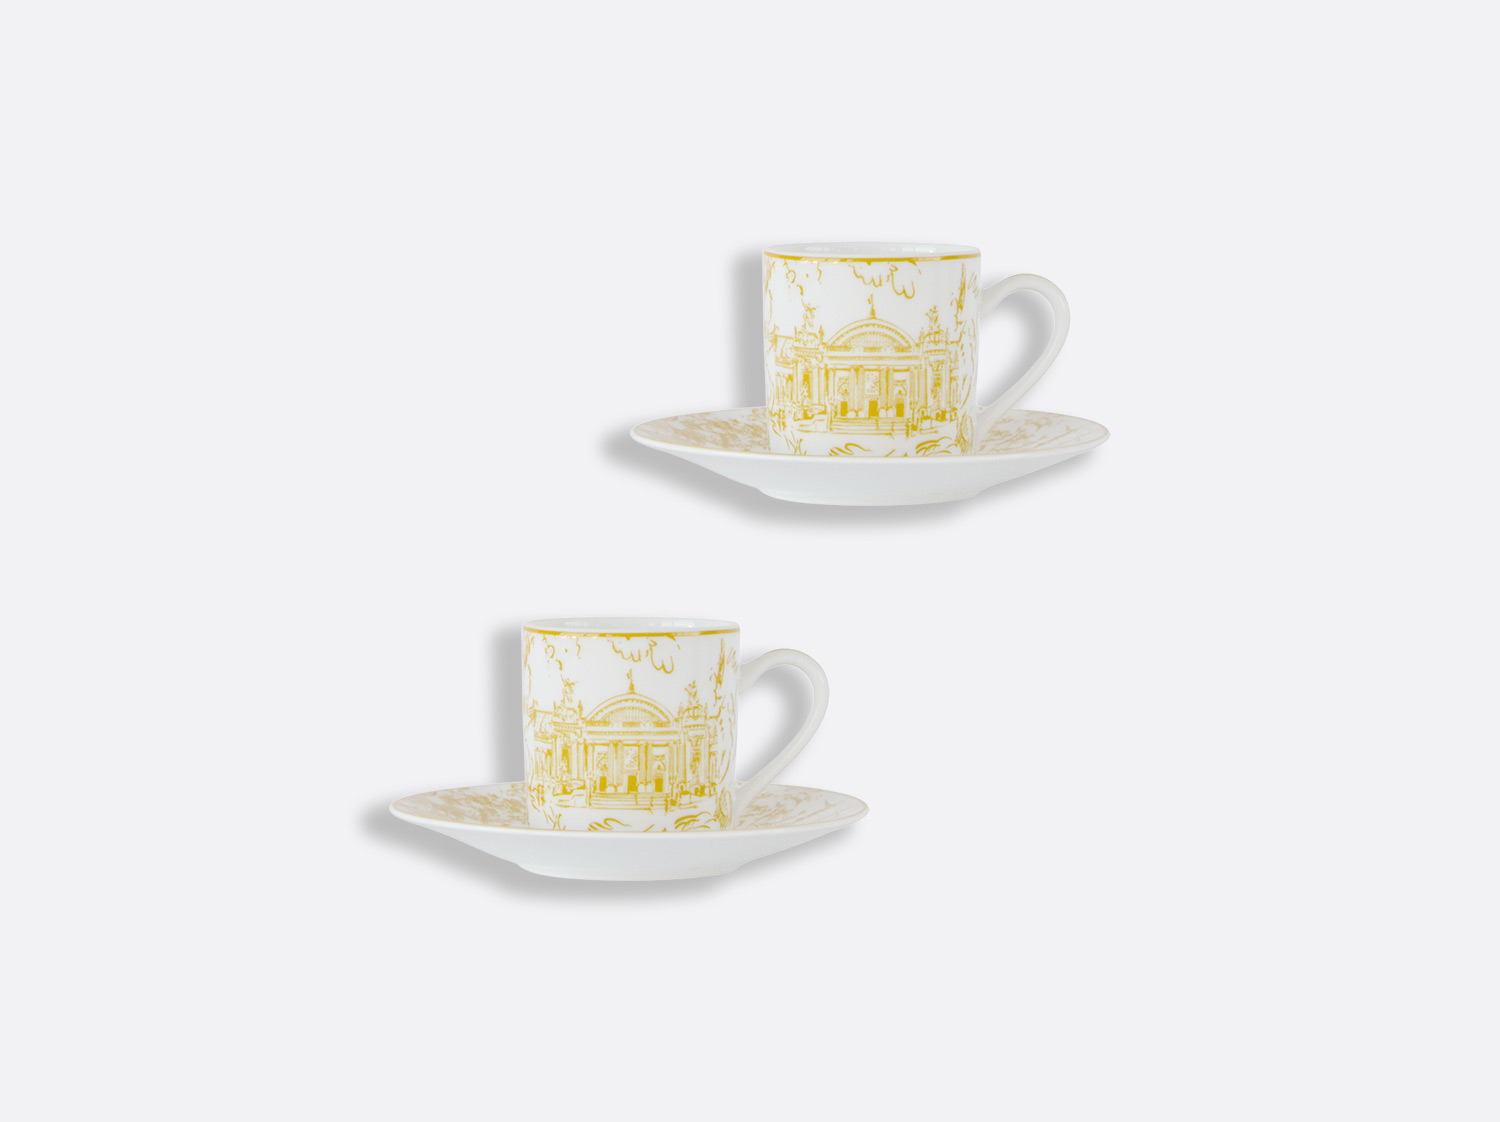 China Set of espresso cups and saucers 3 oz - Set of 2 of the collection Tout Paris | Bernardaud